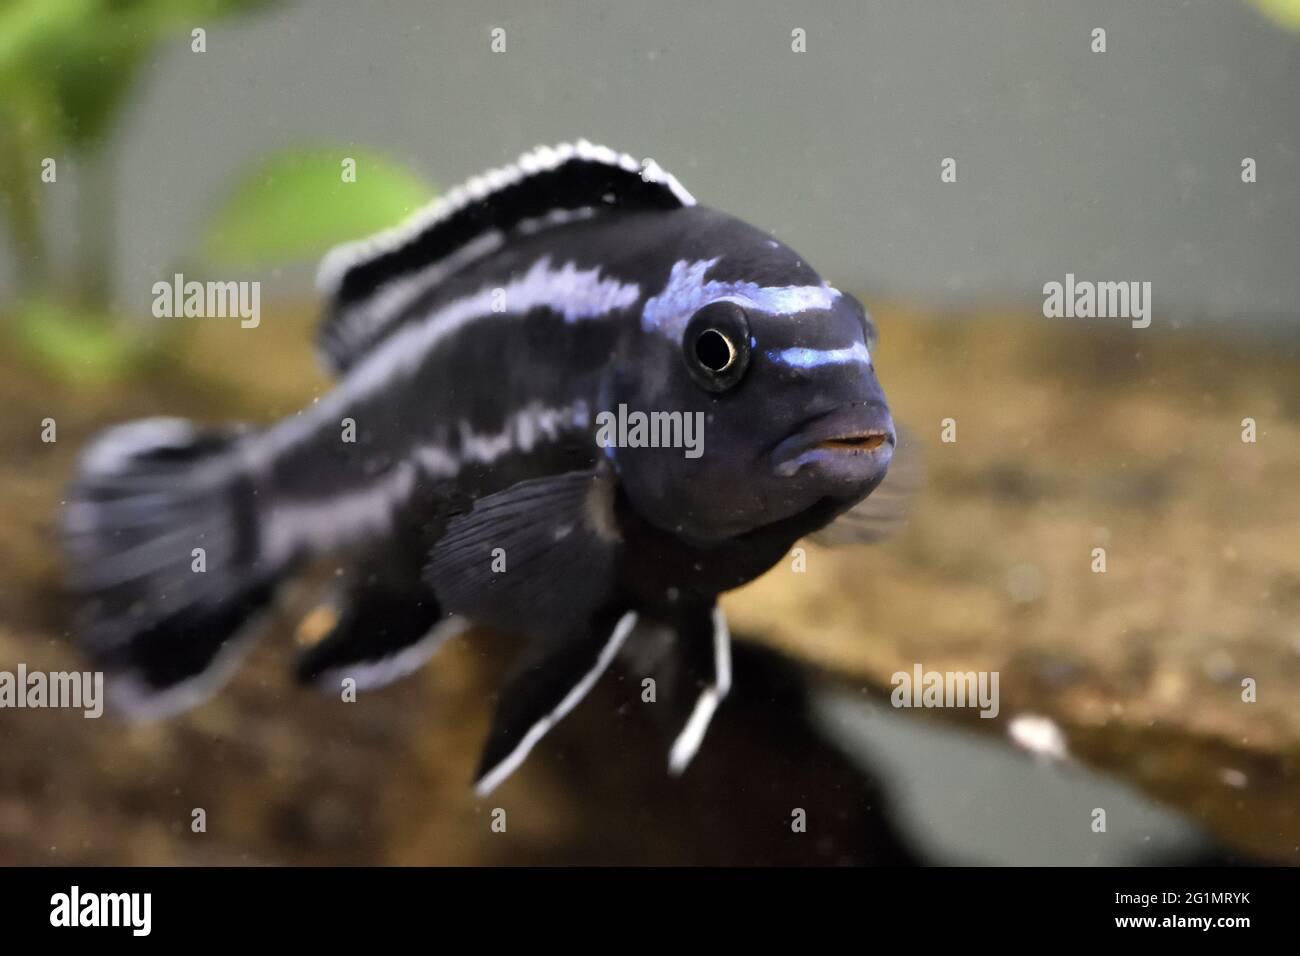 France, Territoire de Belfort, house, aquarium, fish from Lake Malawi, Melanochromis johanni, male Stock Photo